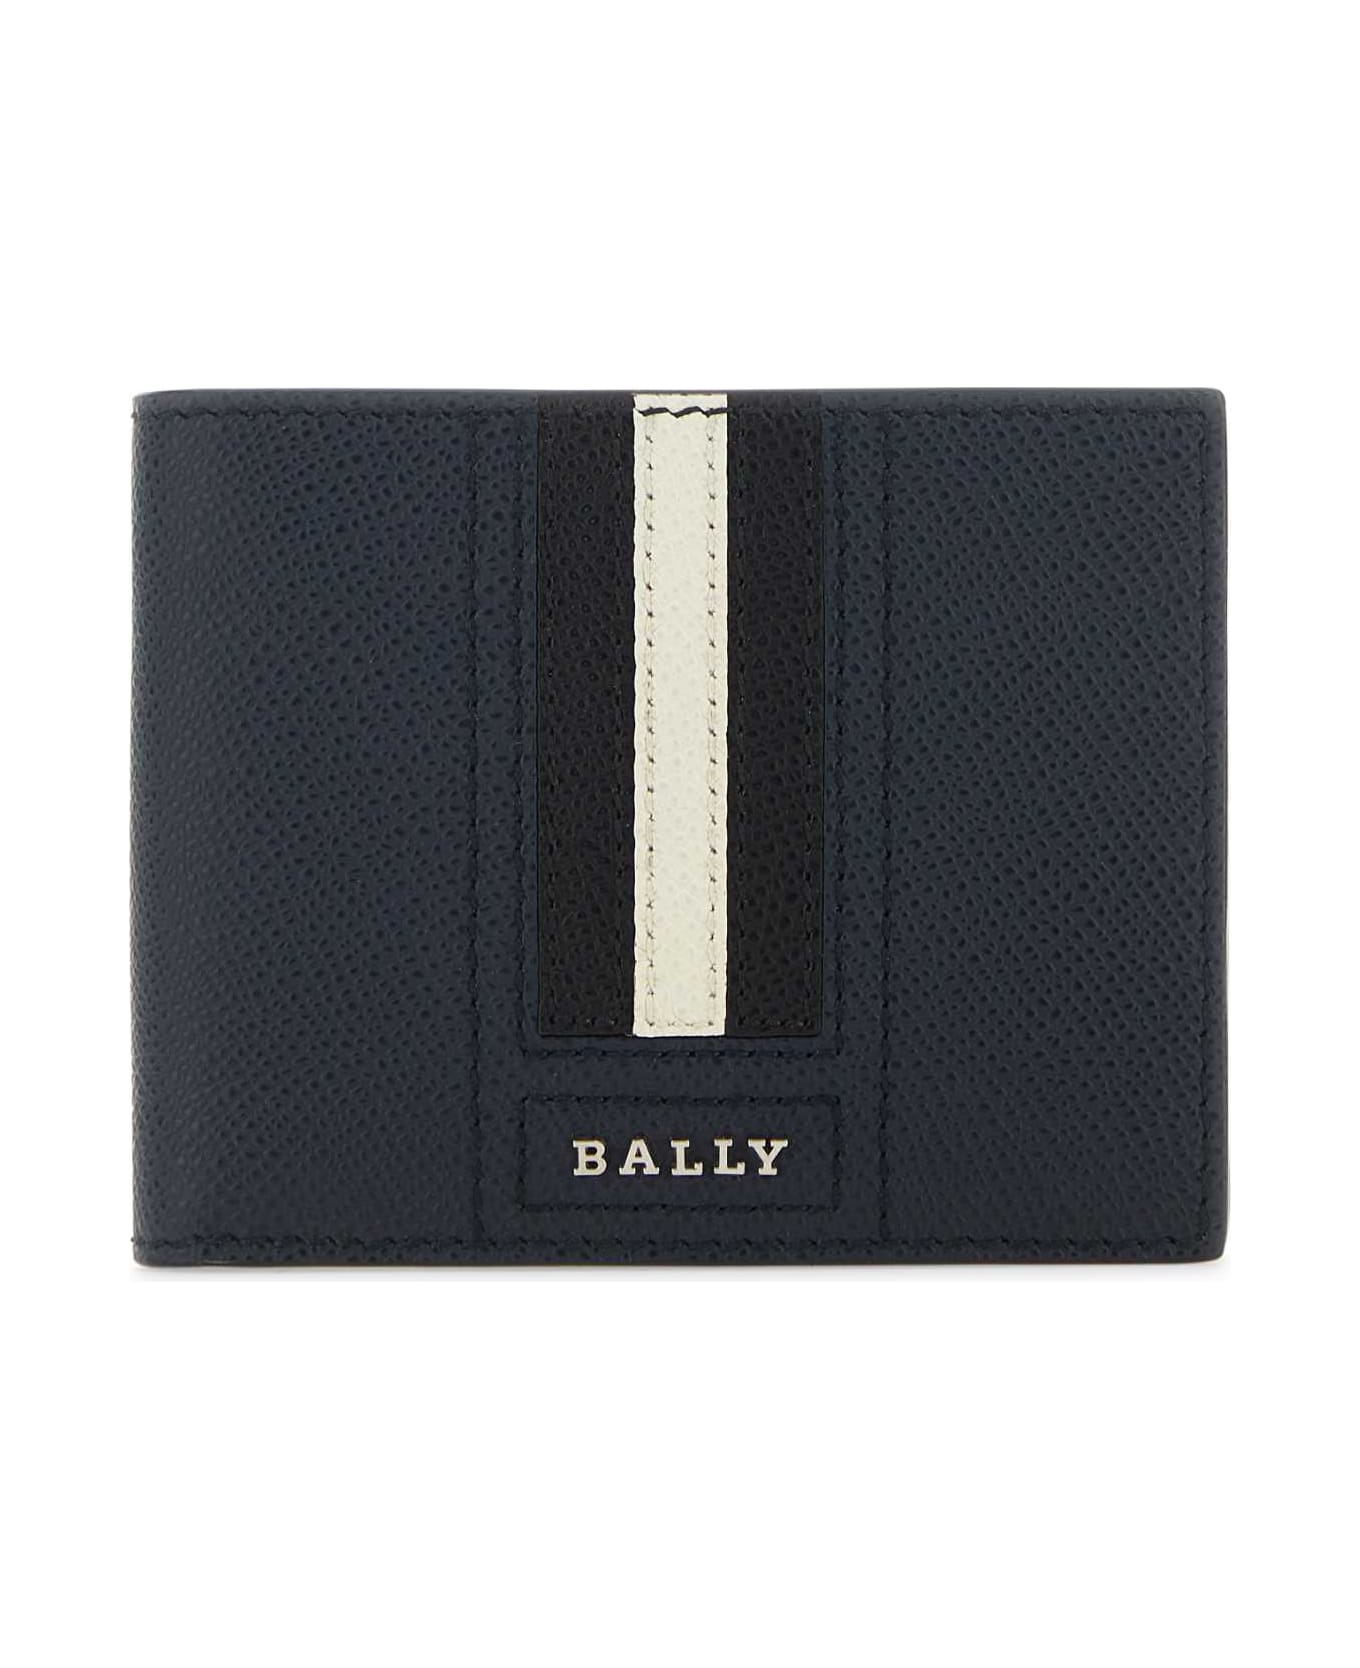 Bally Navy Blue Leather Wallet - NEWBLUE 財布